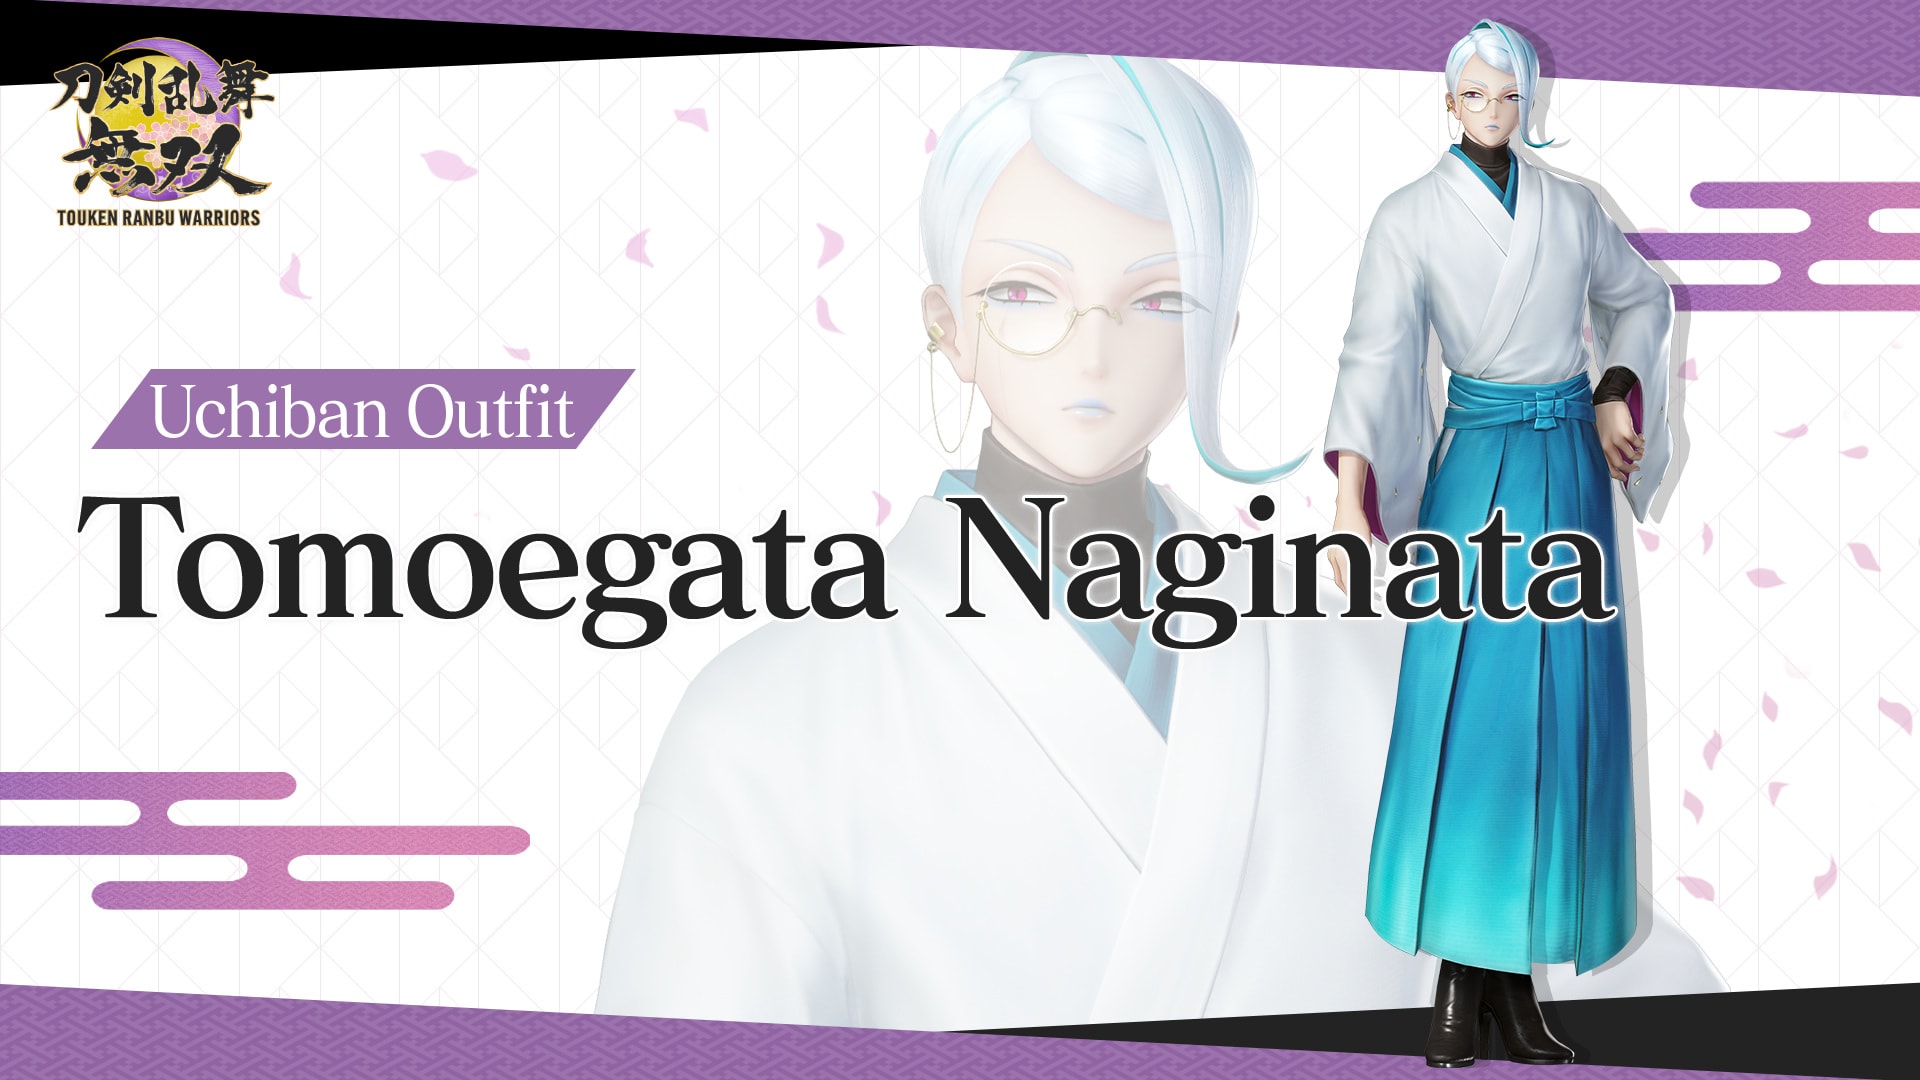 Uchiban Outfit "Tomoegata Naginata"